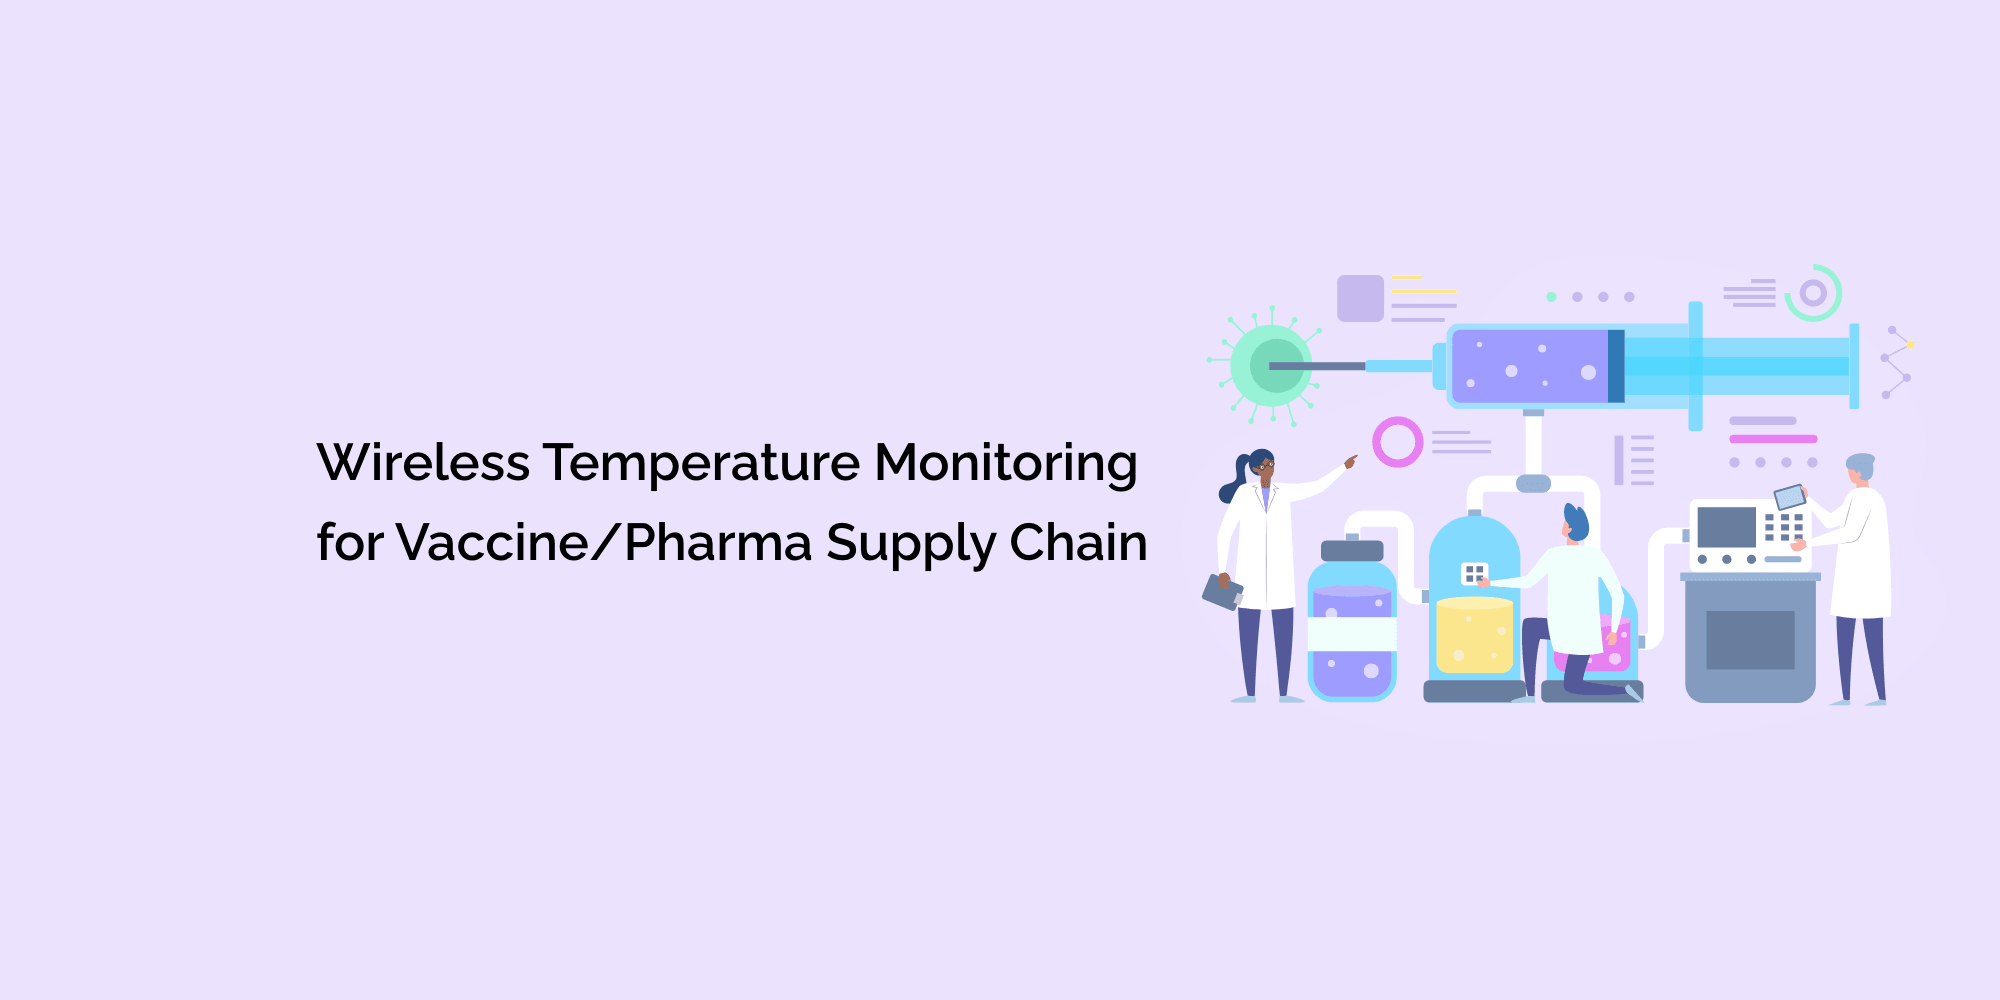 Wireless Temperature Monitoring for Vaccine/Pharma Supply Chain